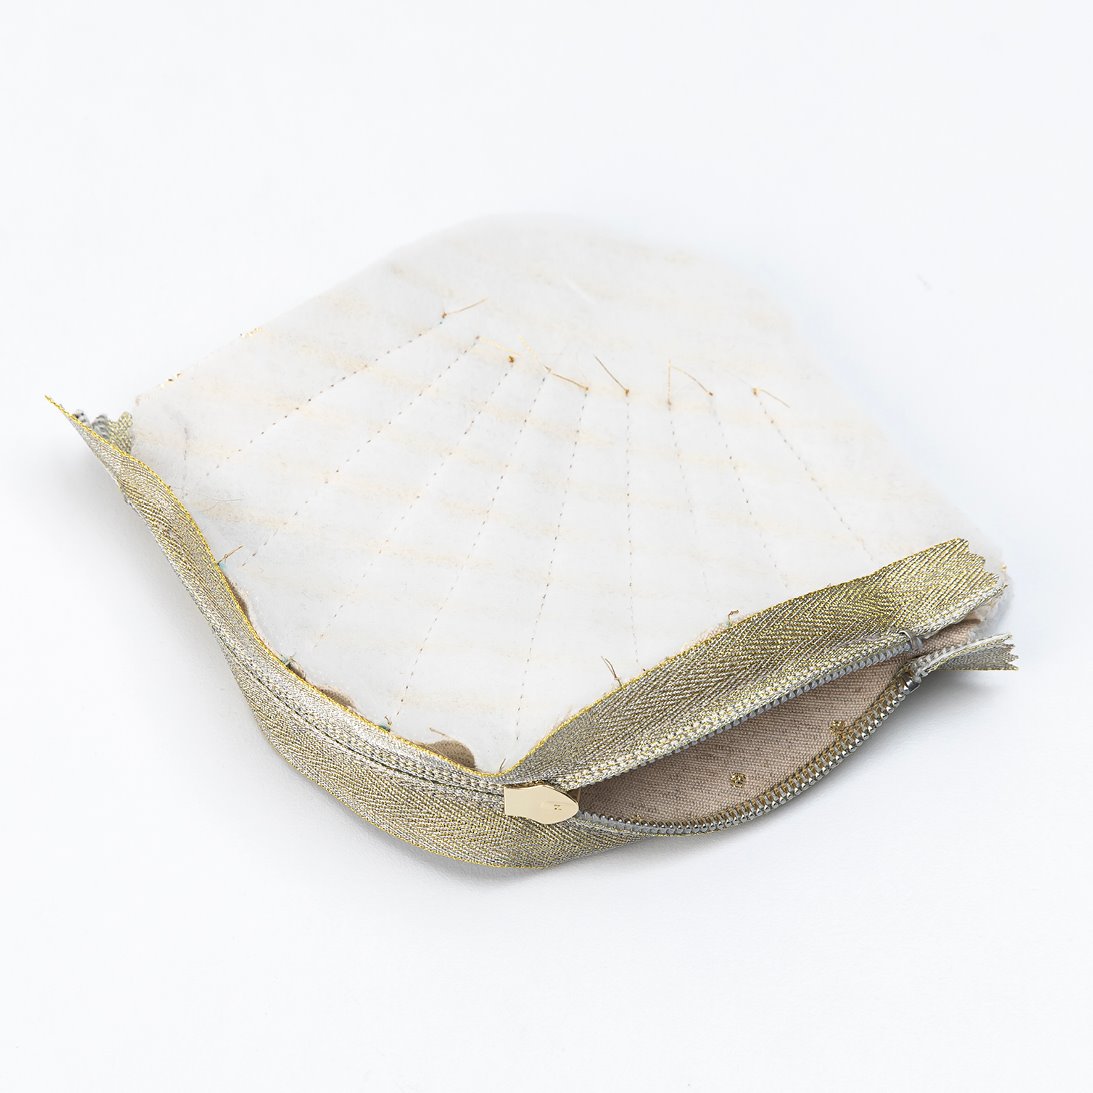 Seashell bag Diy7010-diy_step4.jpg